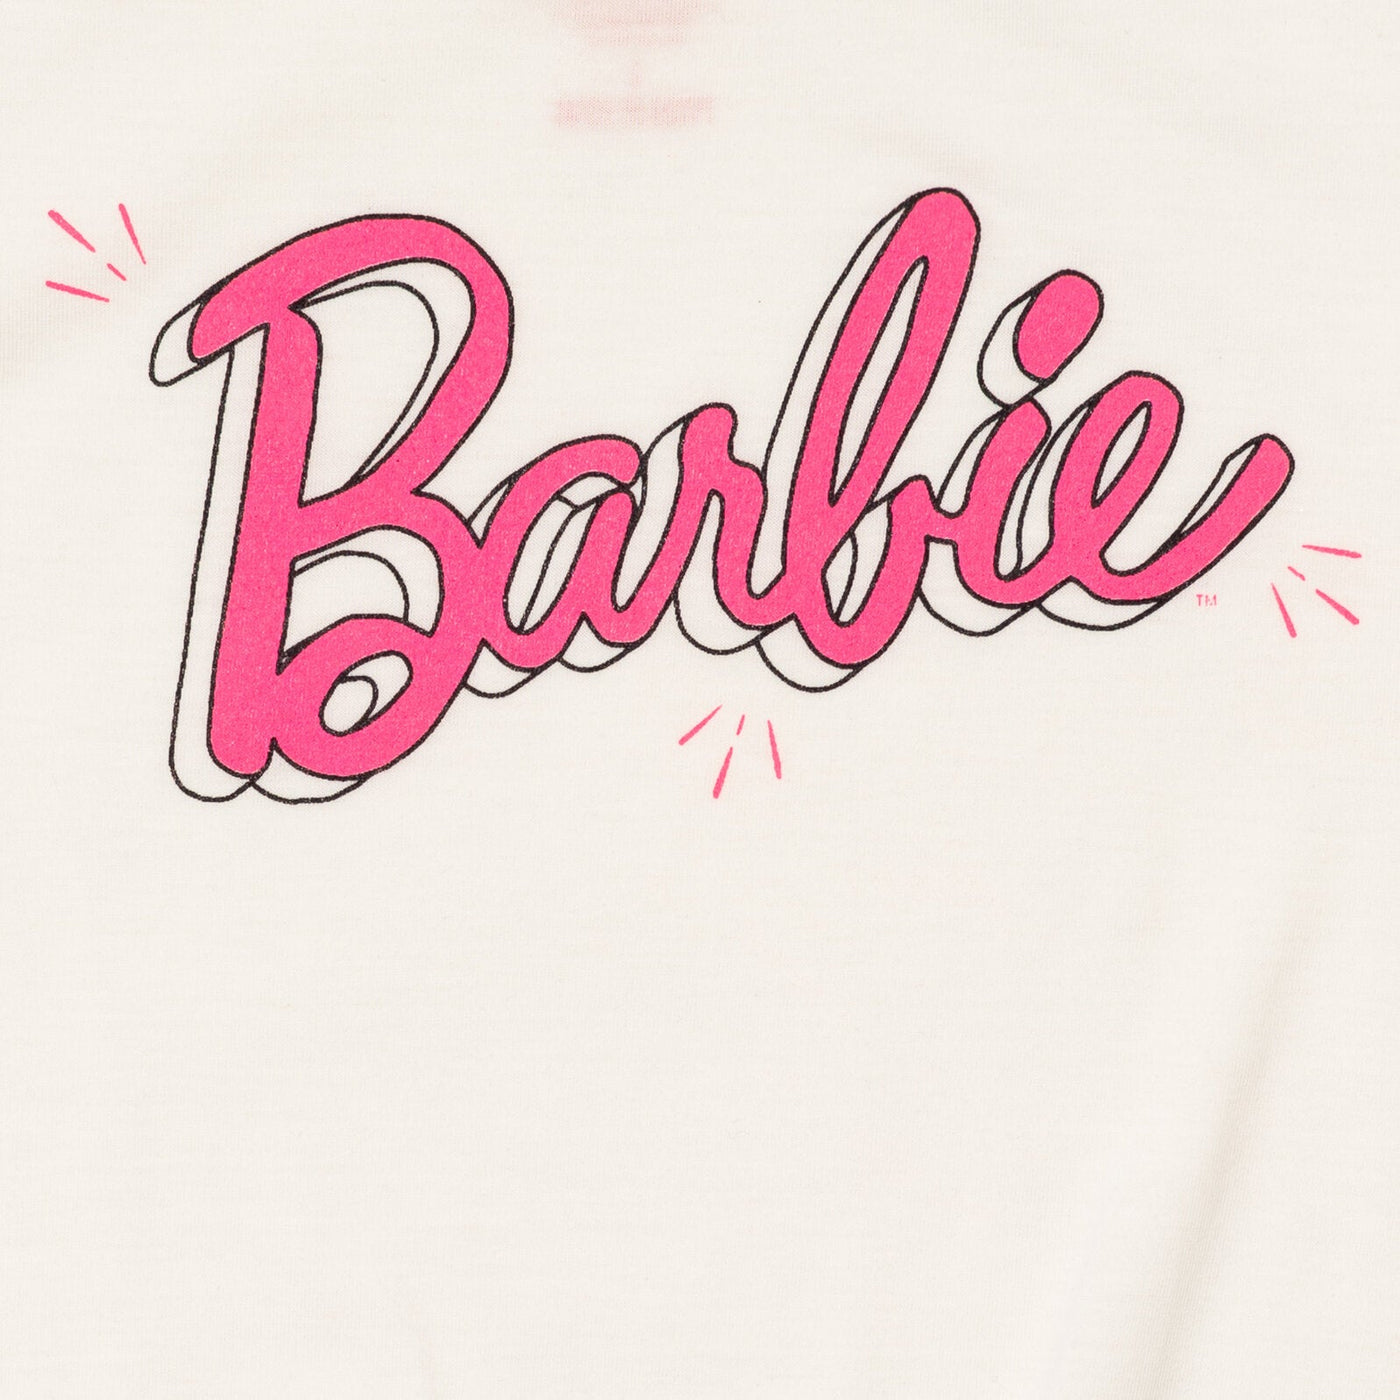 Barbie Knotted Graphic T-Shirt & Bike Shorts - imagikids